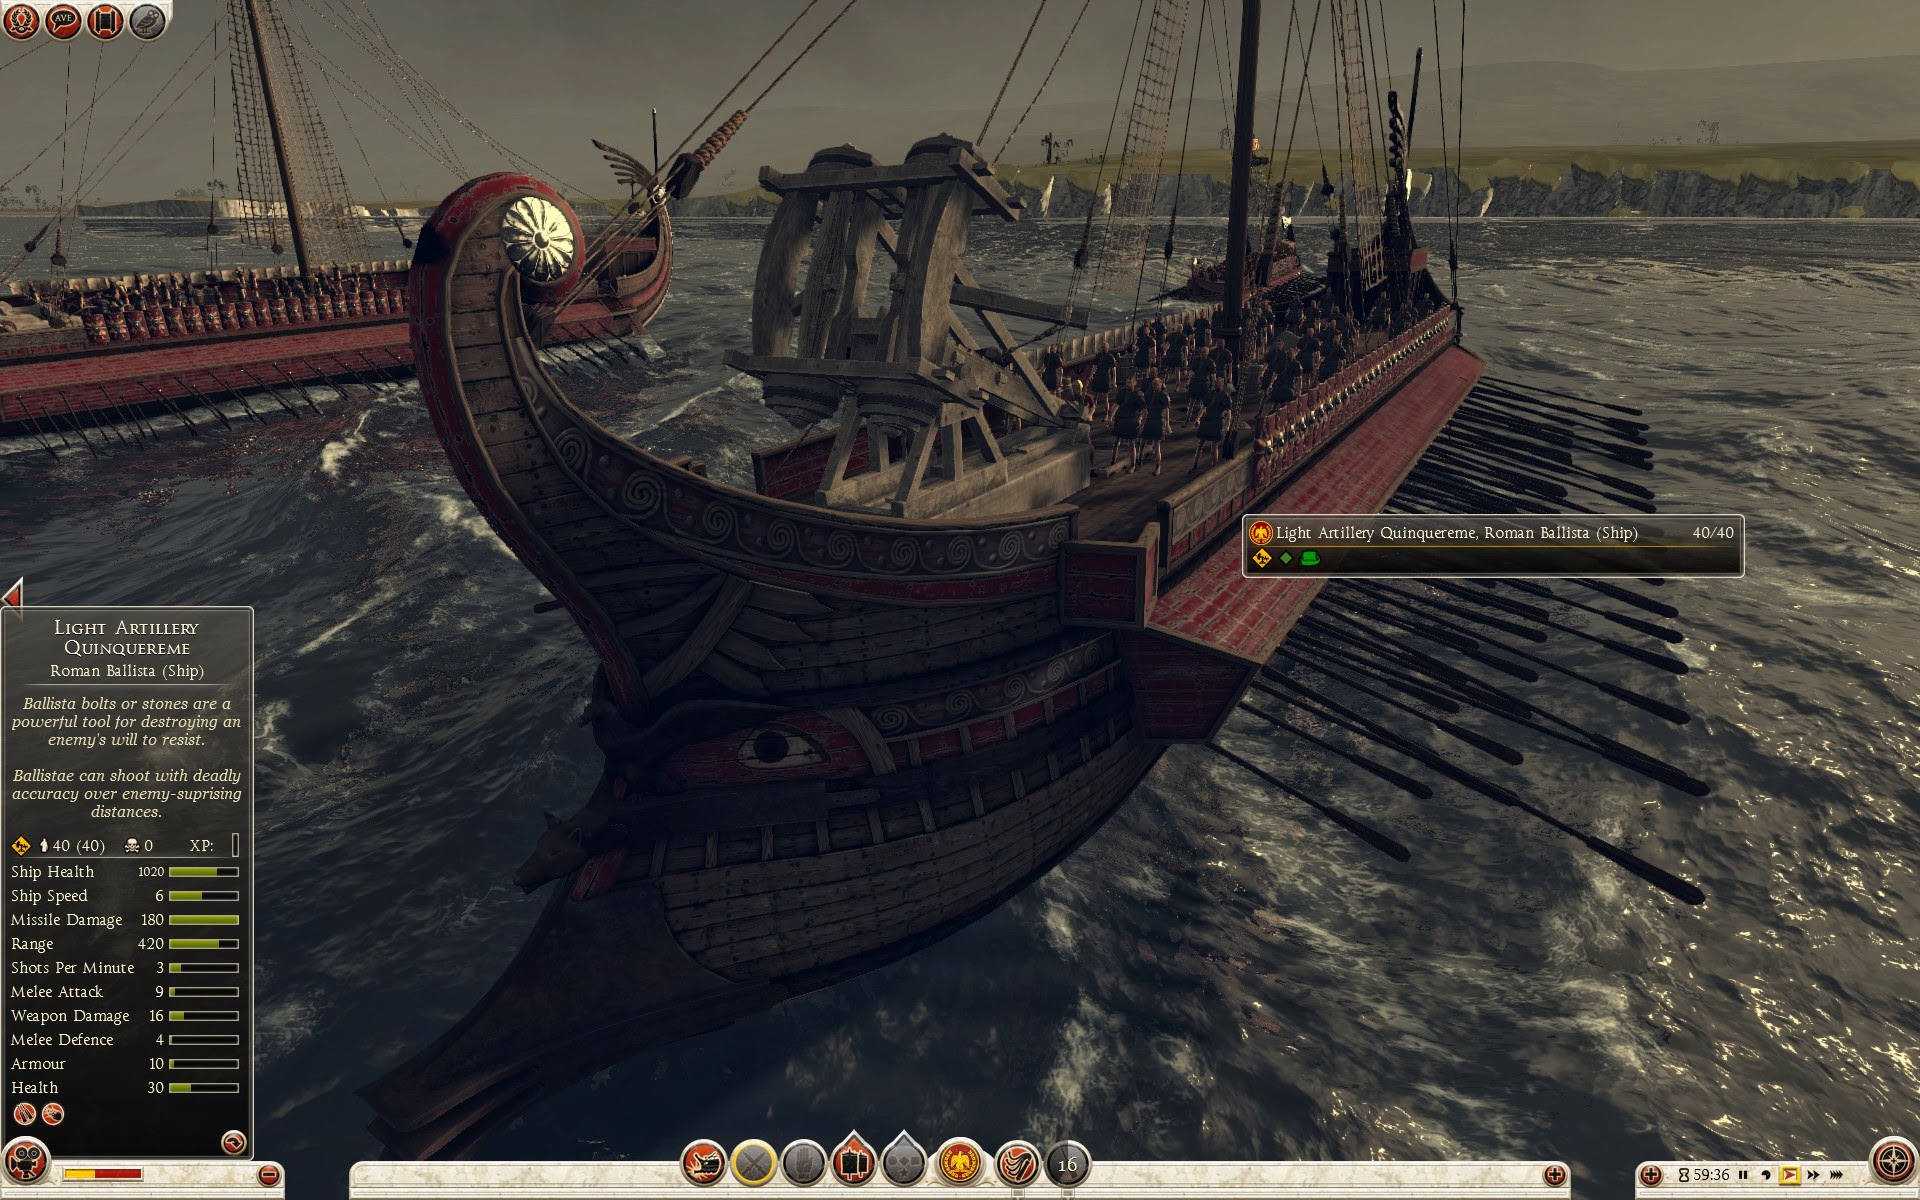 Quinquerreme de artillería ligera - Balista romana (barco)